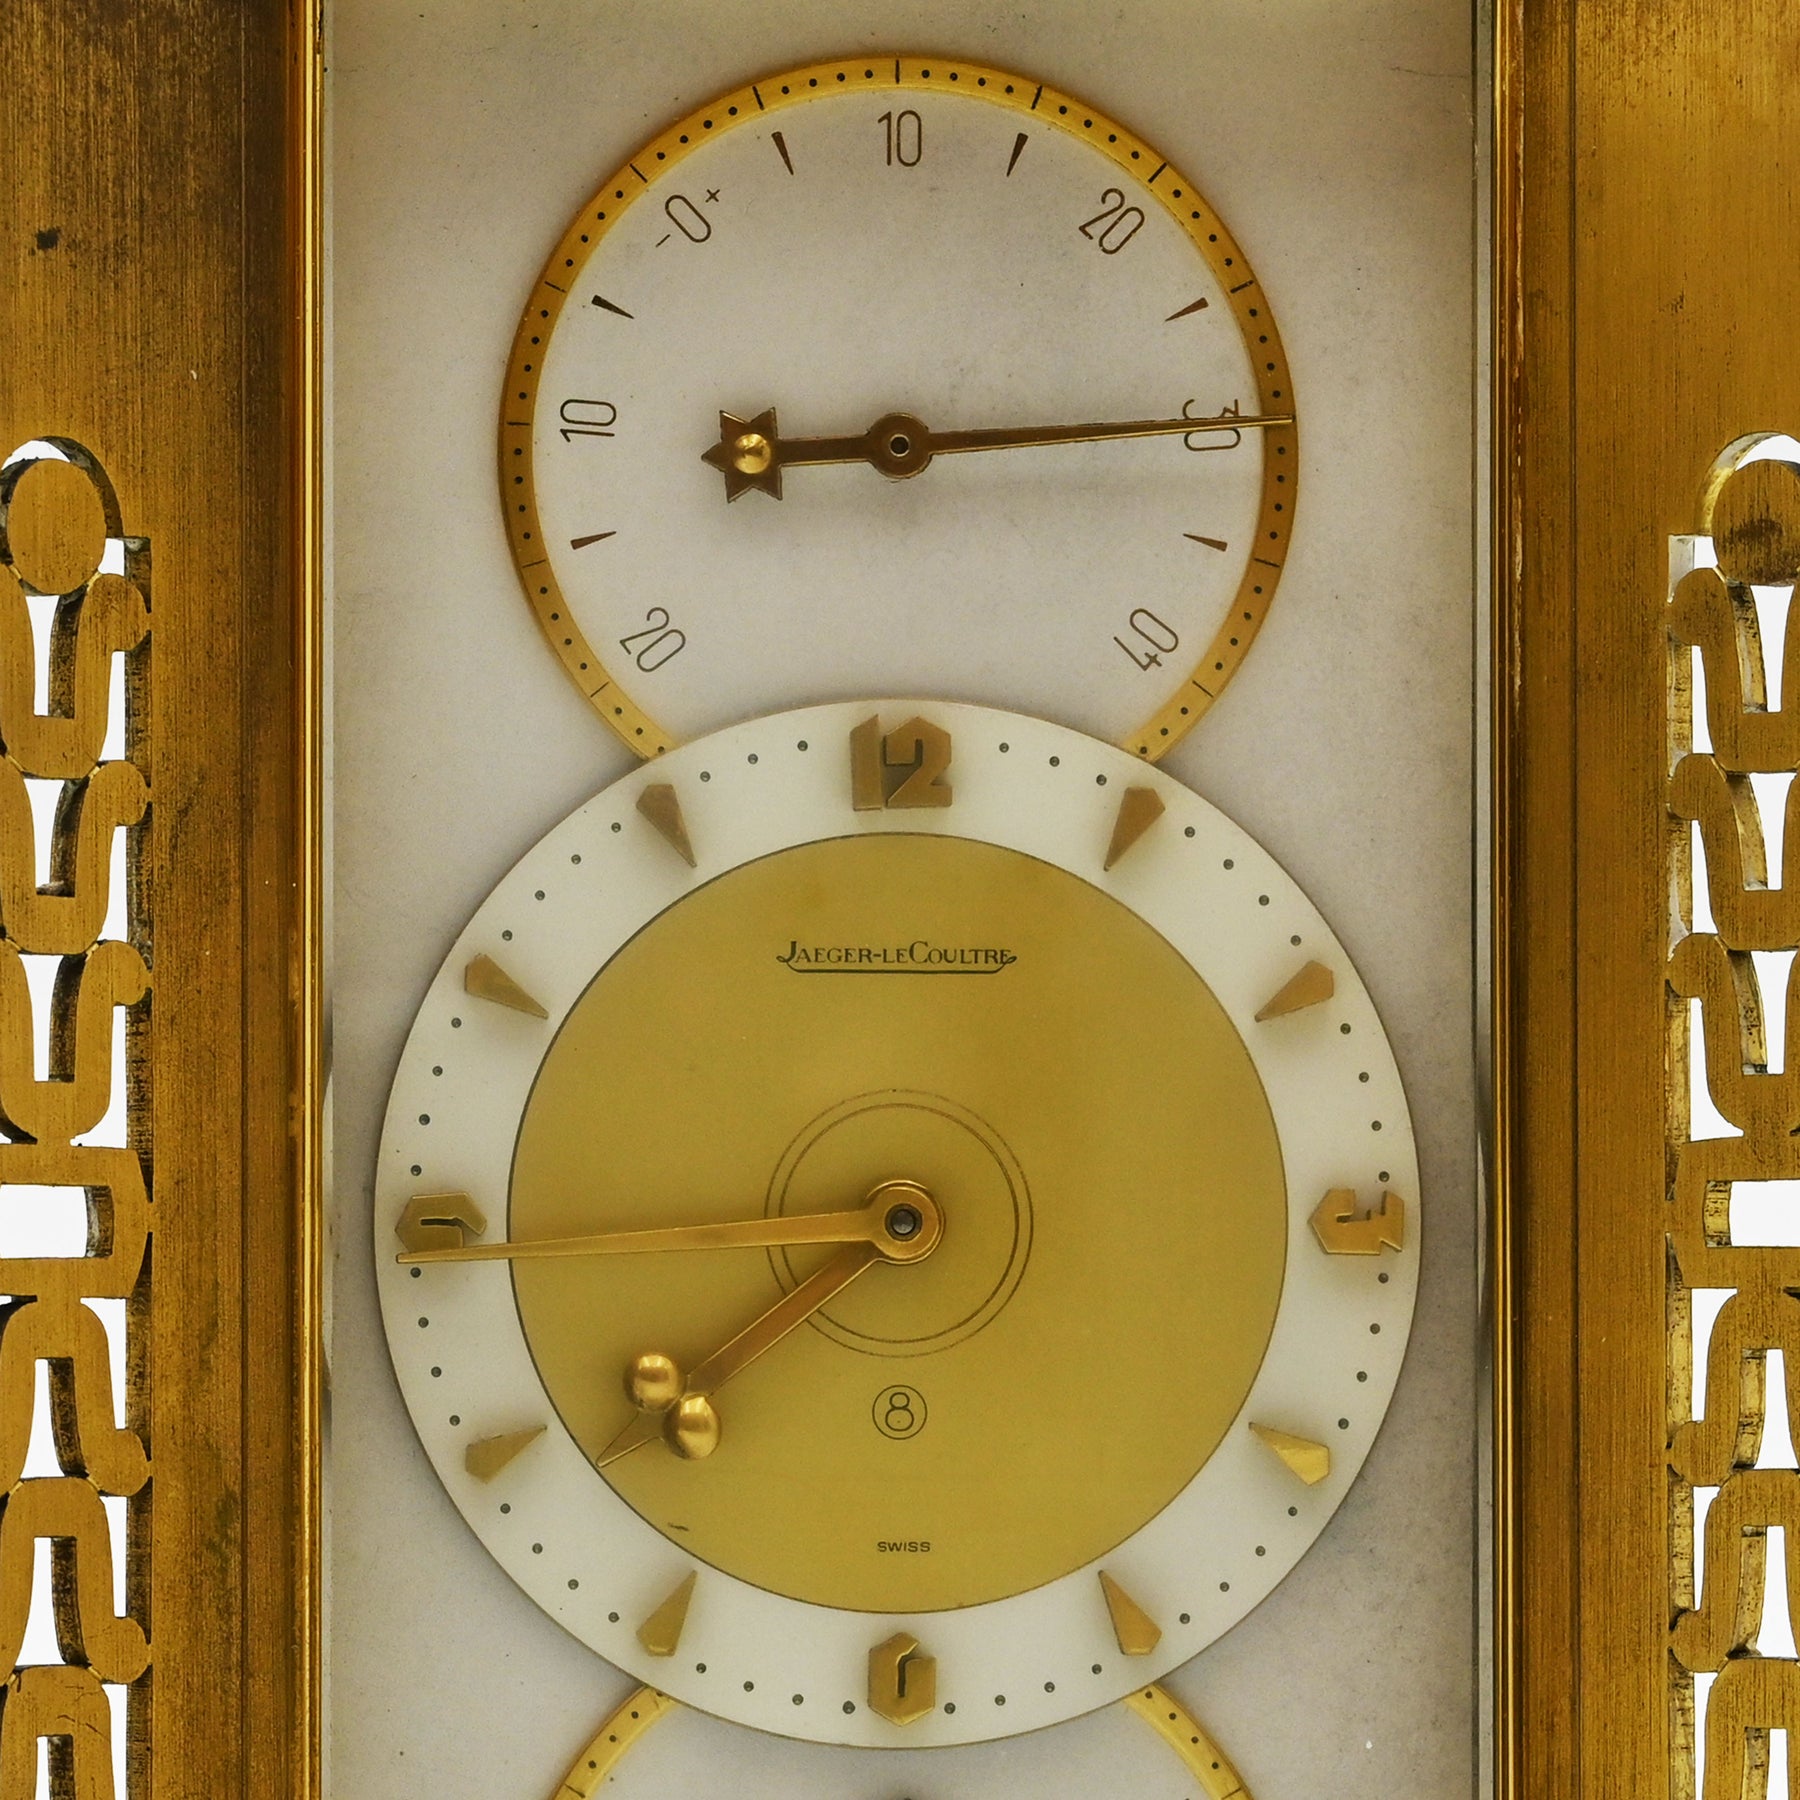 JLC Atmos Travel 2 Door Glass & Brass Clock & Barometer